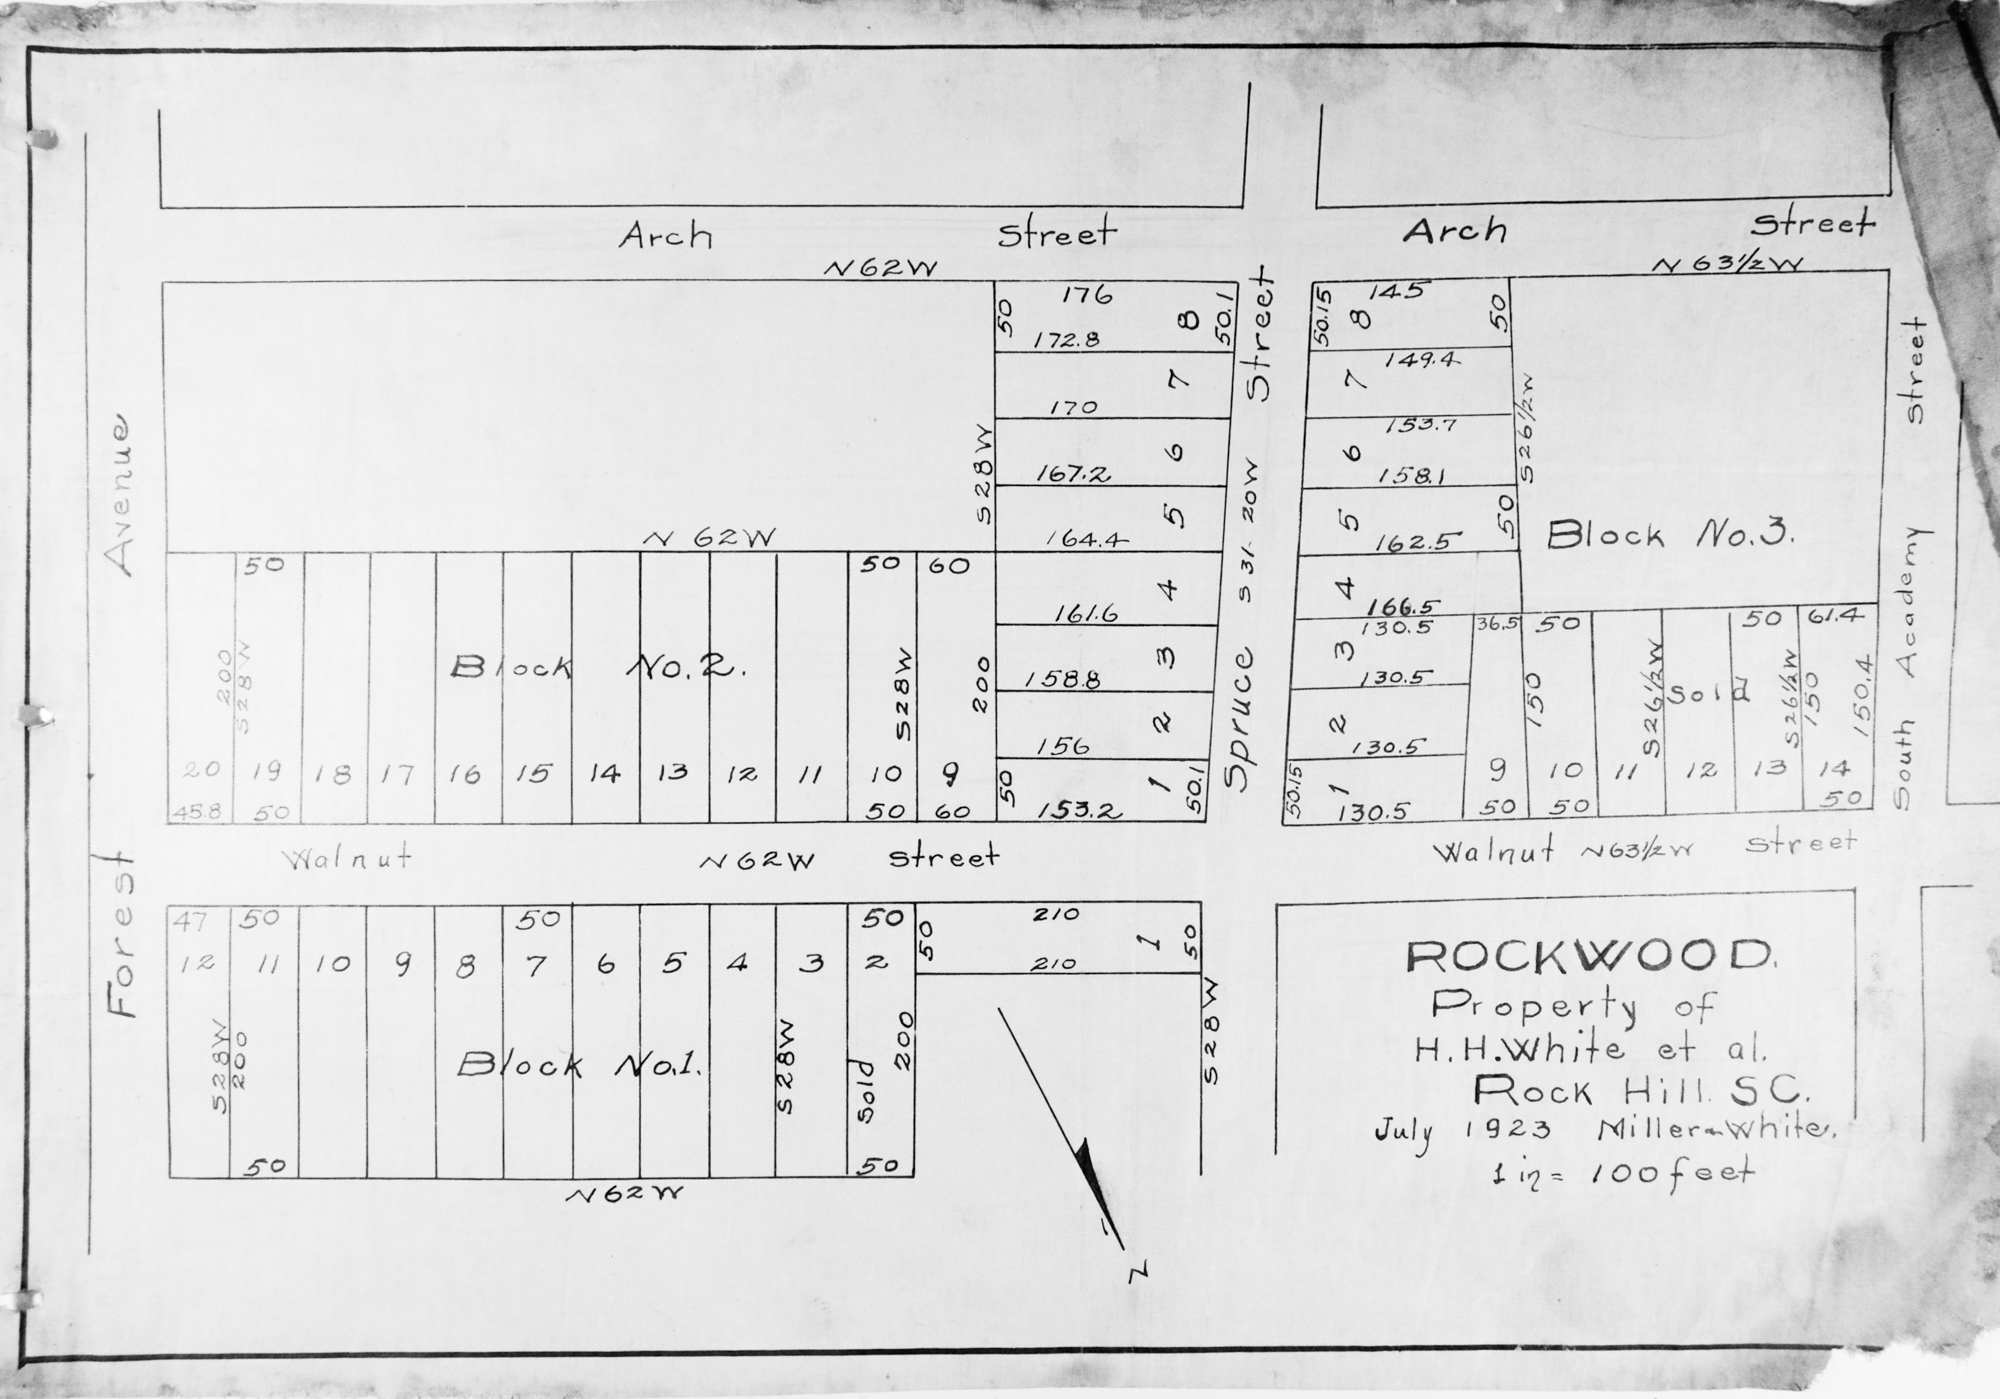 SURVEY OF WALNUT STREET AND ROCKWOOD DEVELOPMENT - 1923